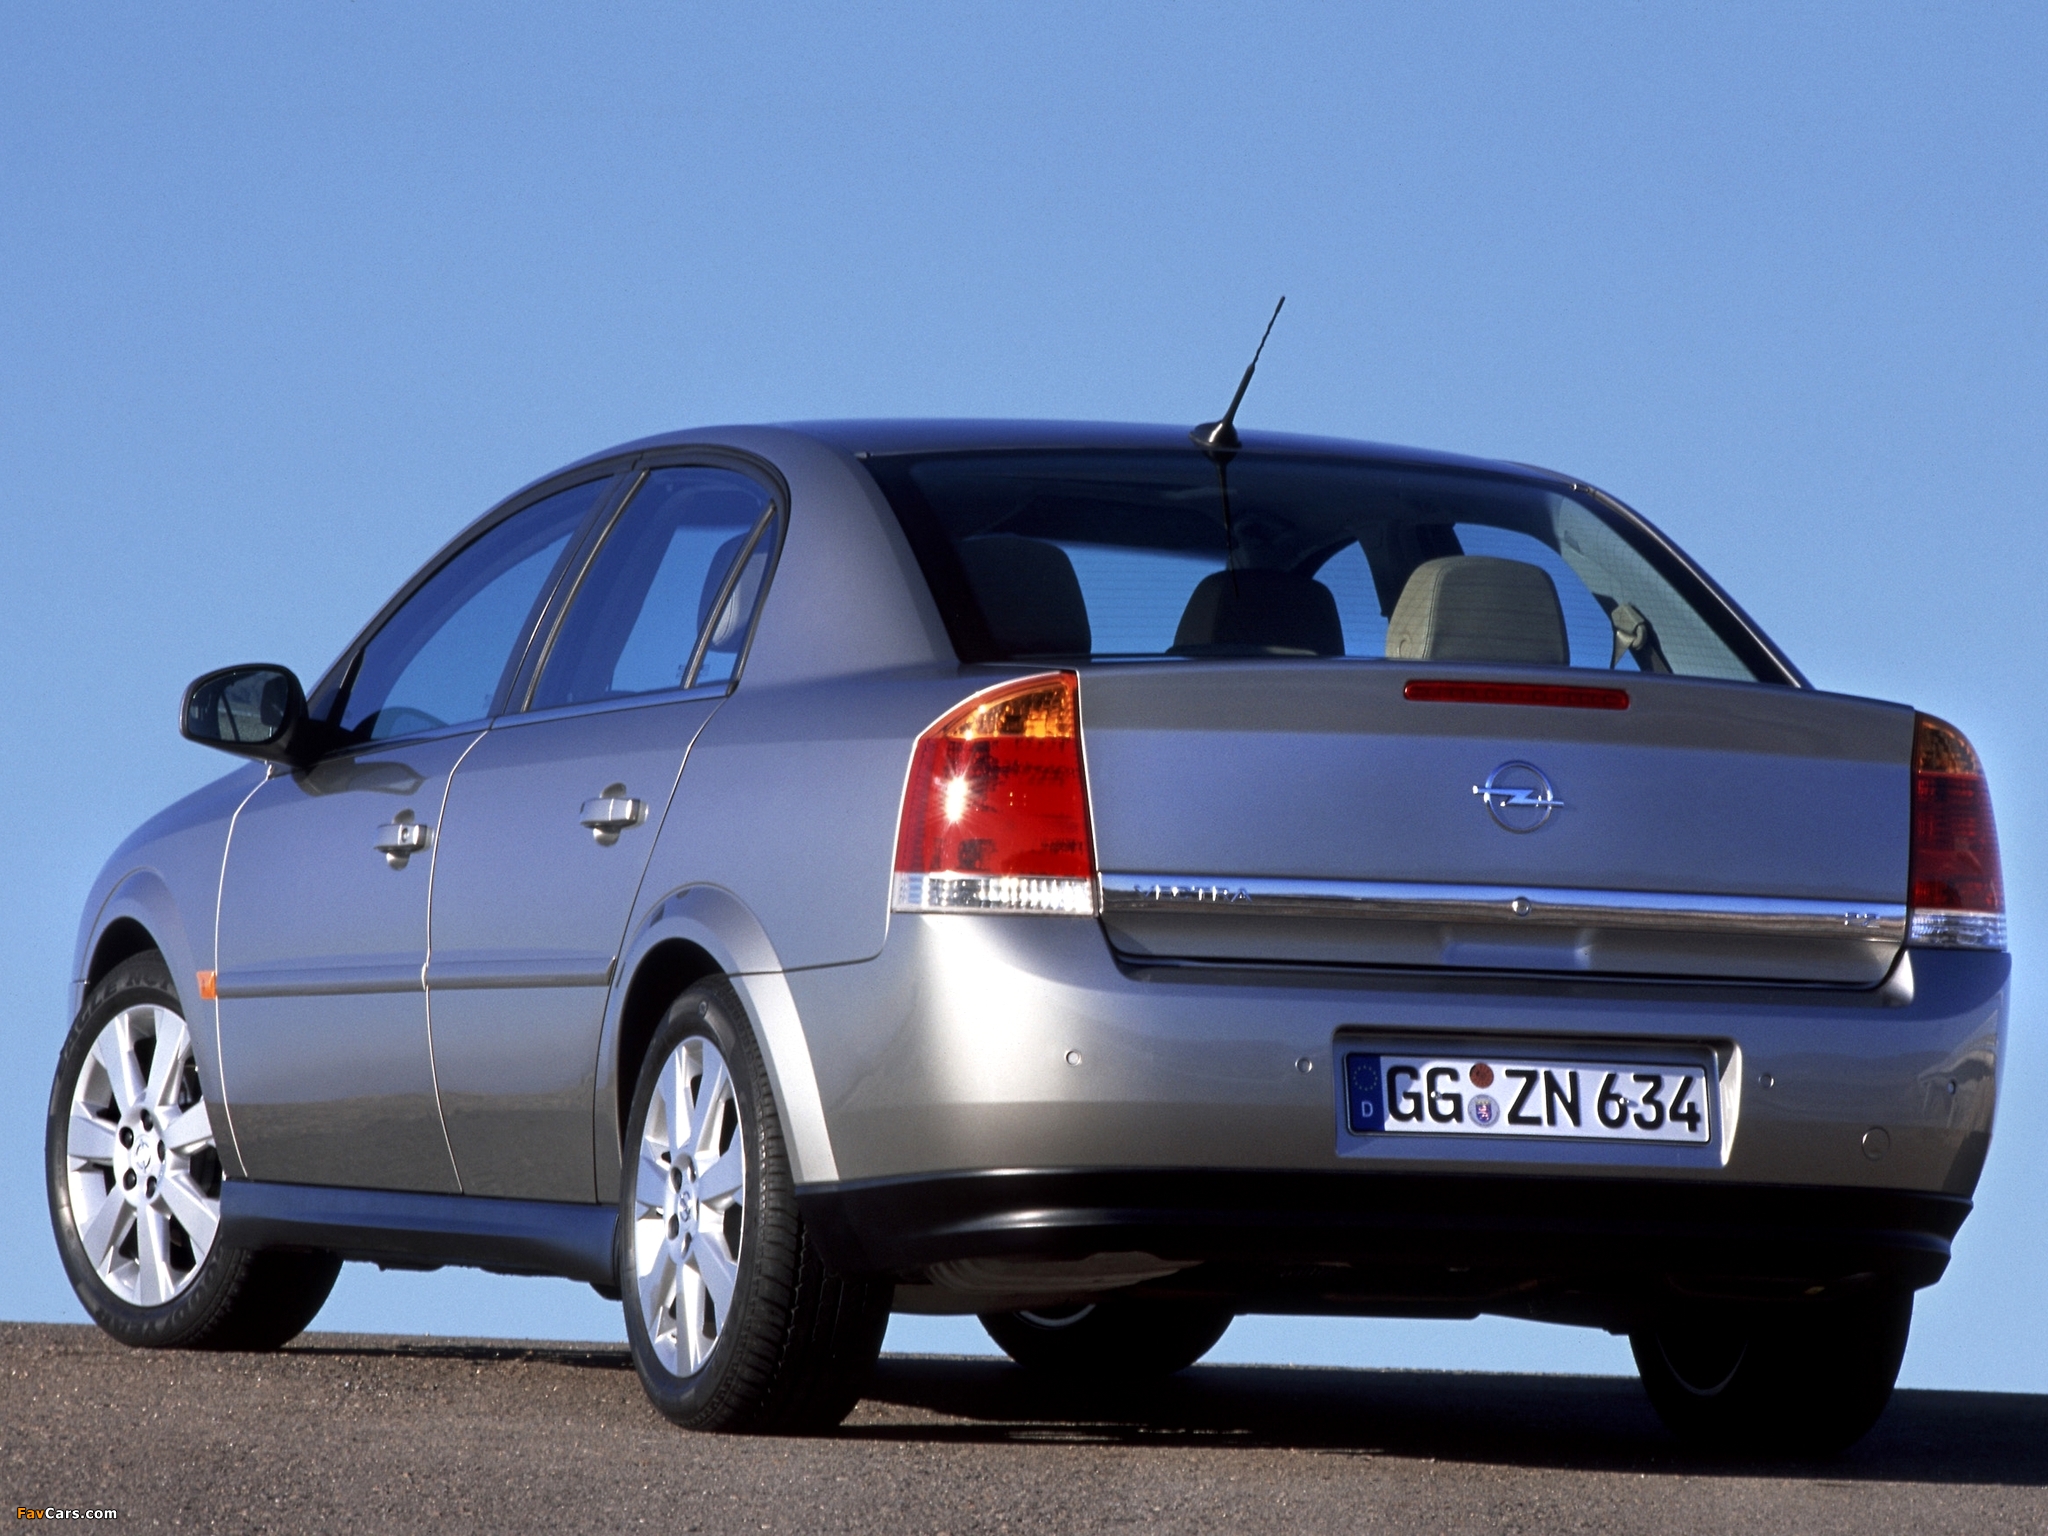 Автомобиль вектра б. Opel Vectra c 2002-2005 седан. Опель Вектра седан 2002. Опель Вектра ц 2002. Opel Vectra c 2004.